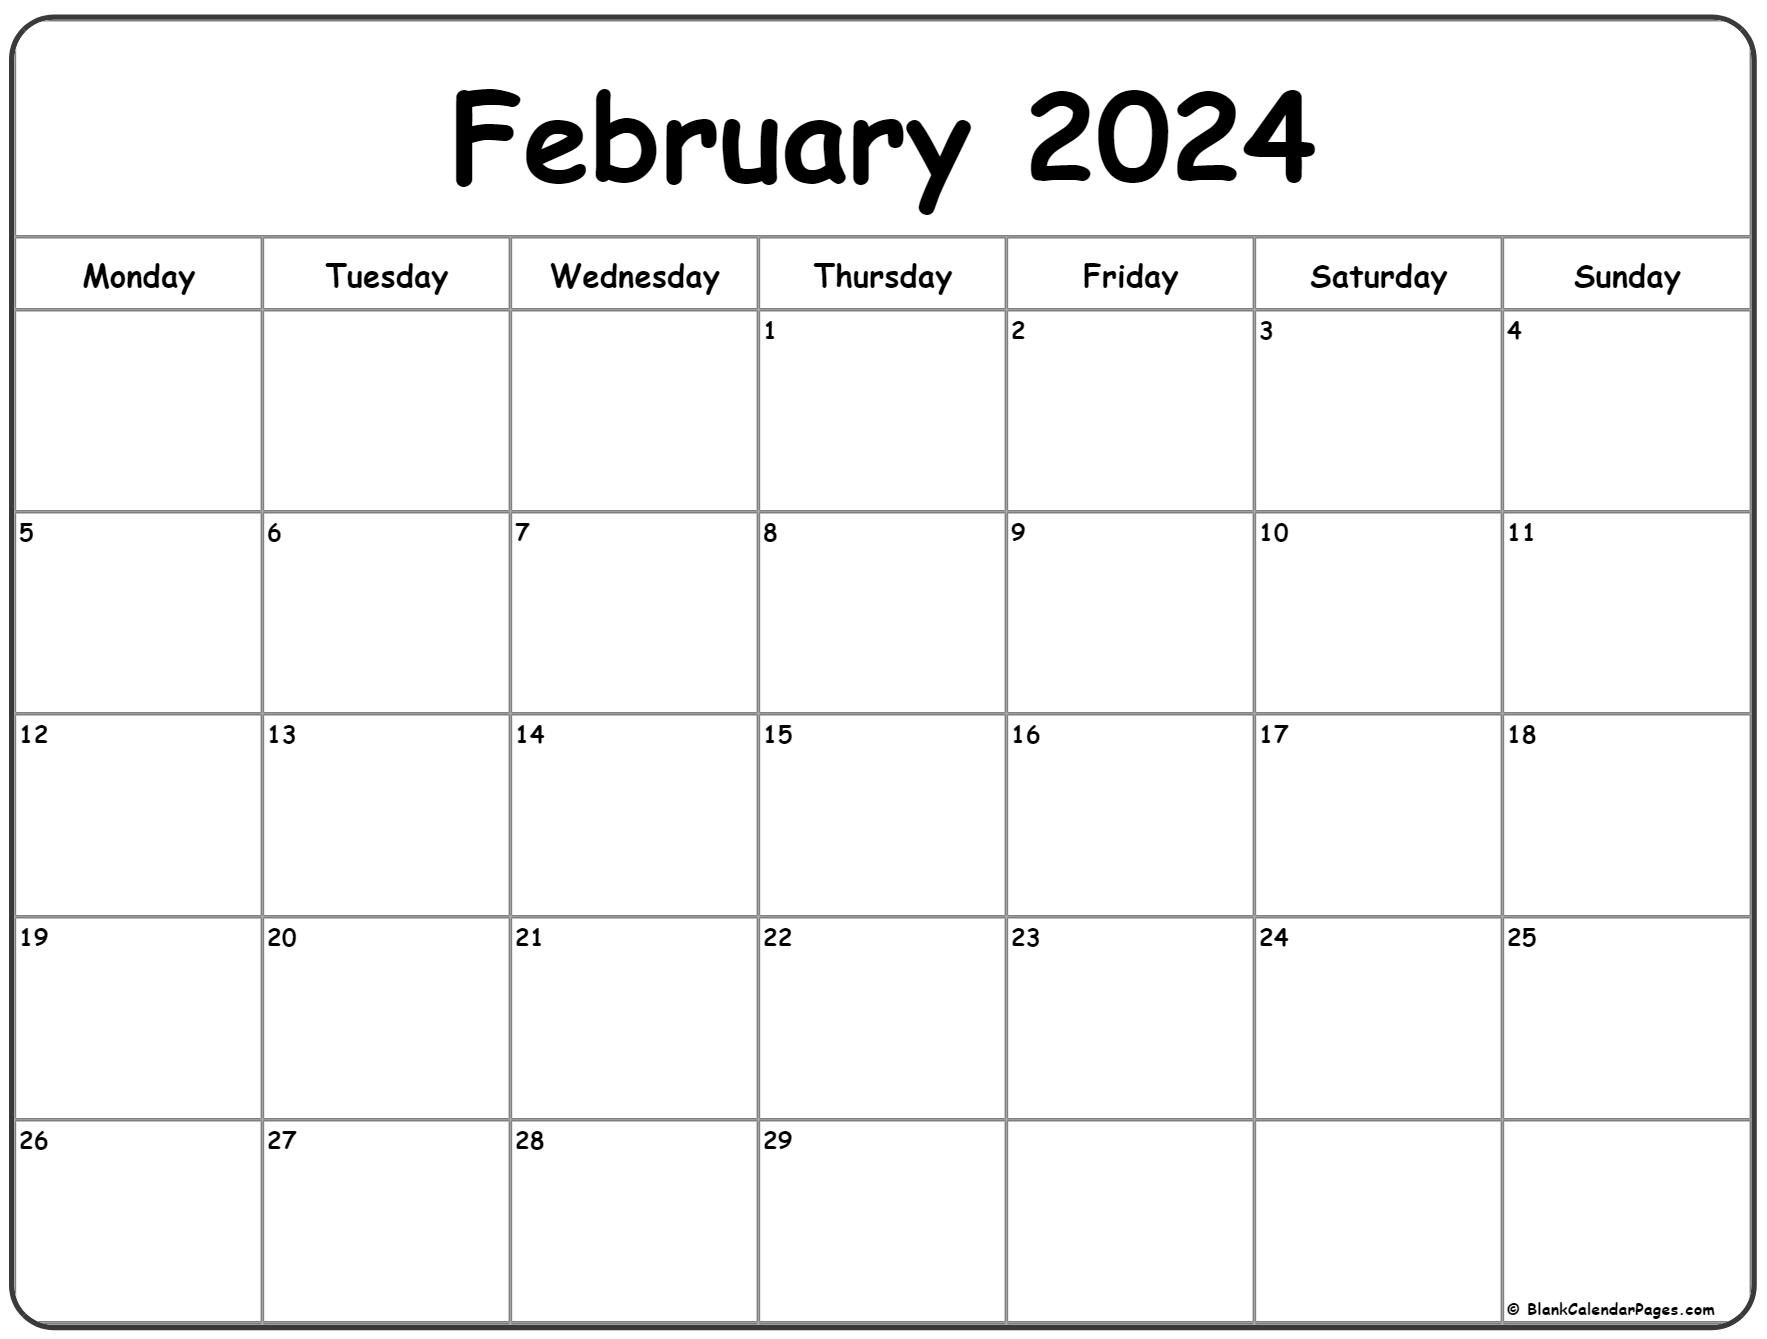 Print February 2022 Calendar February 2022 Monday Calendar | Monday To Sunday